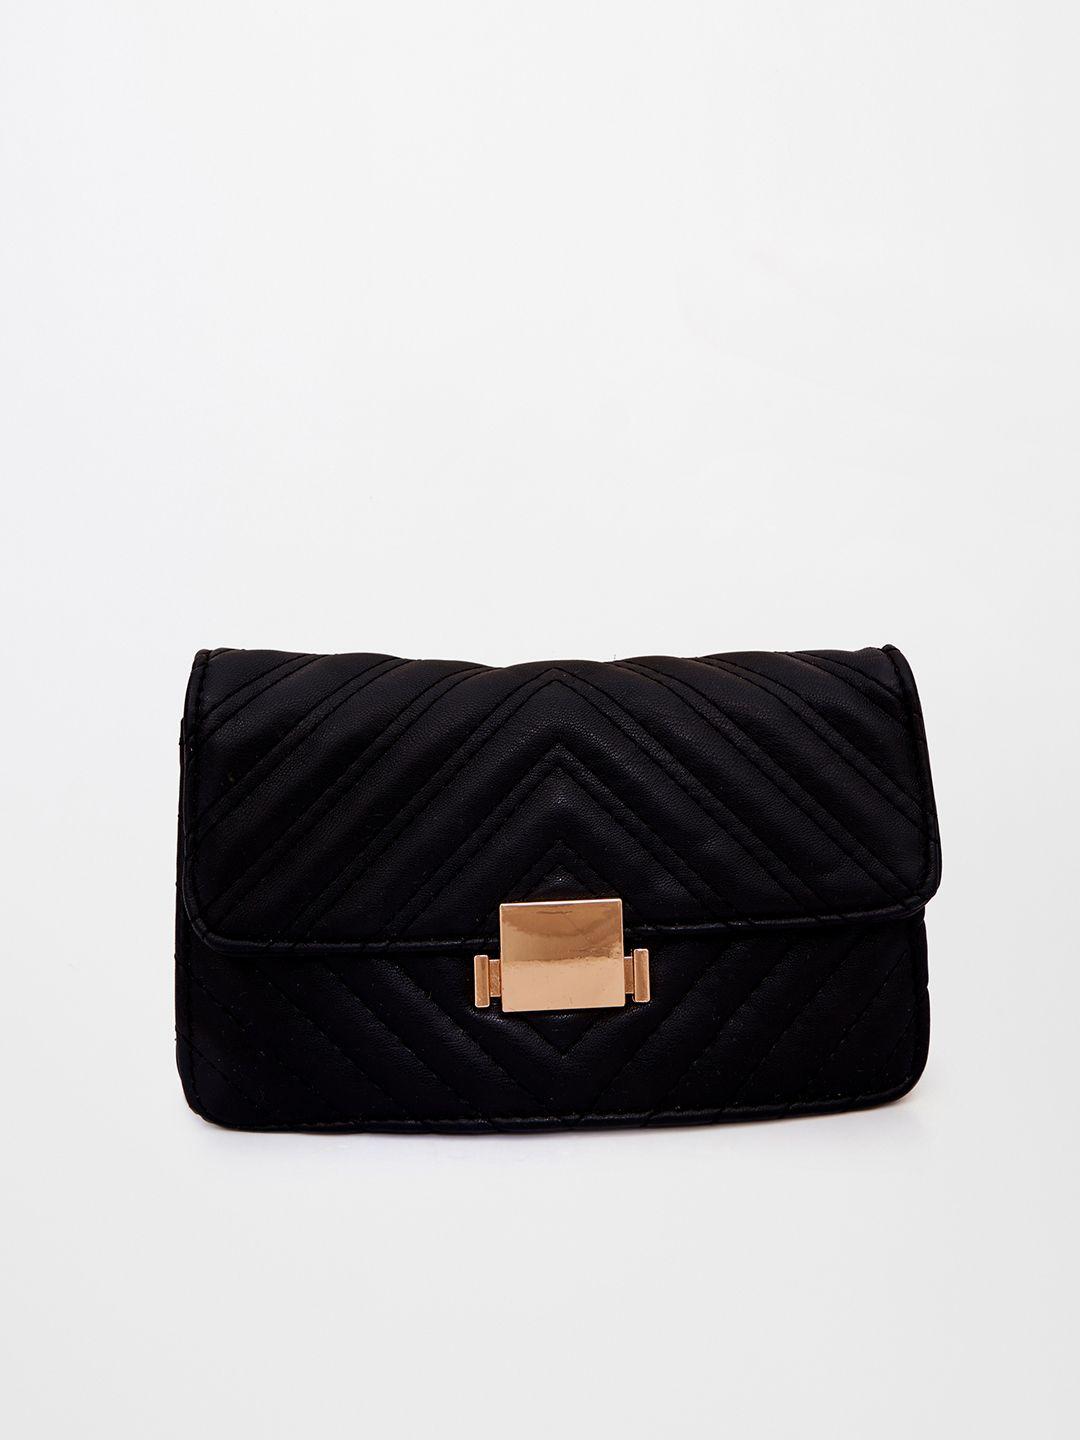 global desi black textured purse clutch